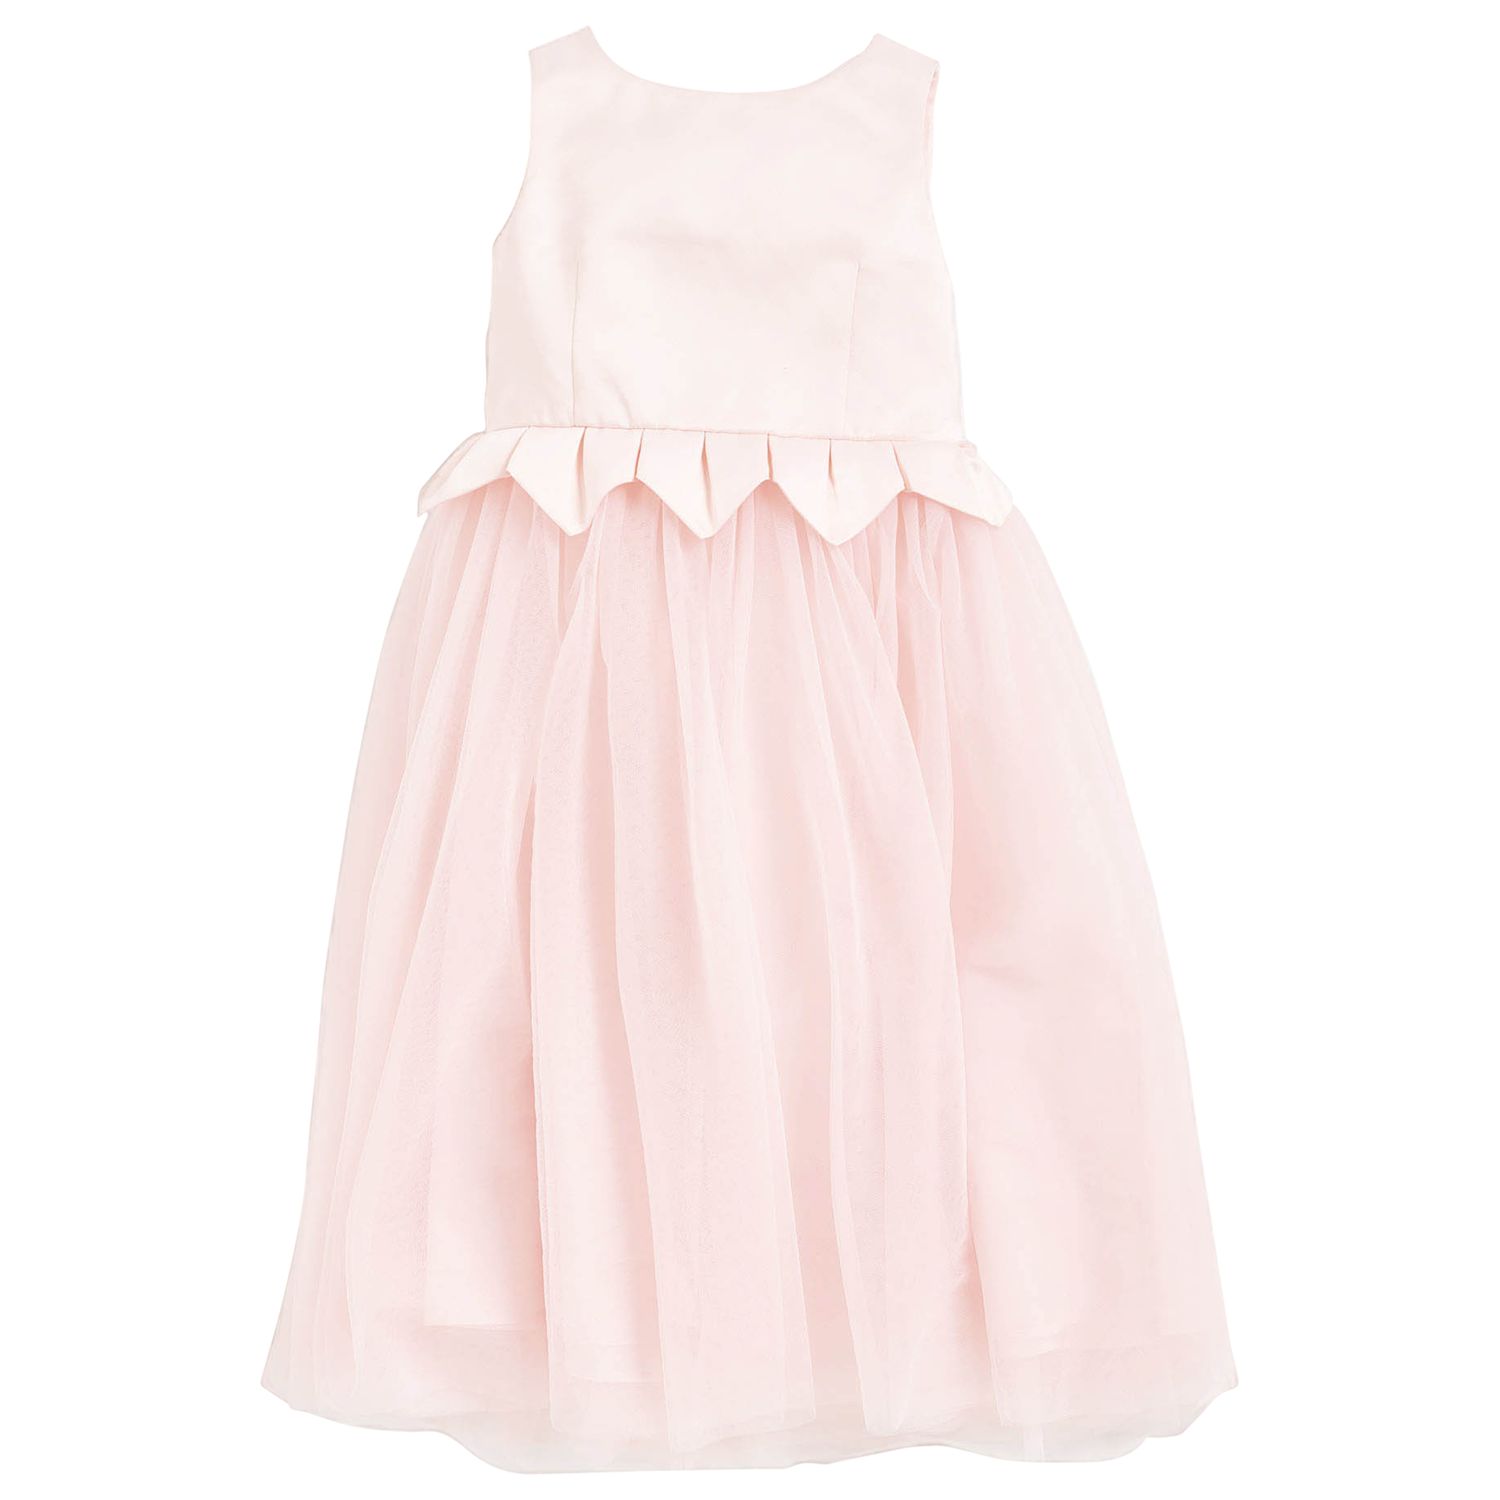 Angel & Rocket Girls' Tulle Skirt Dress, Pink